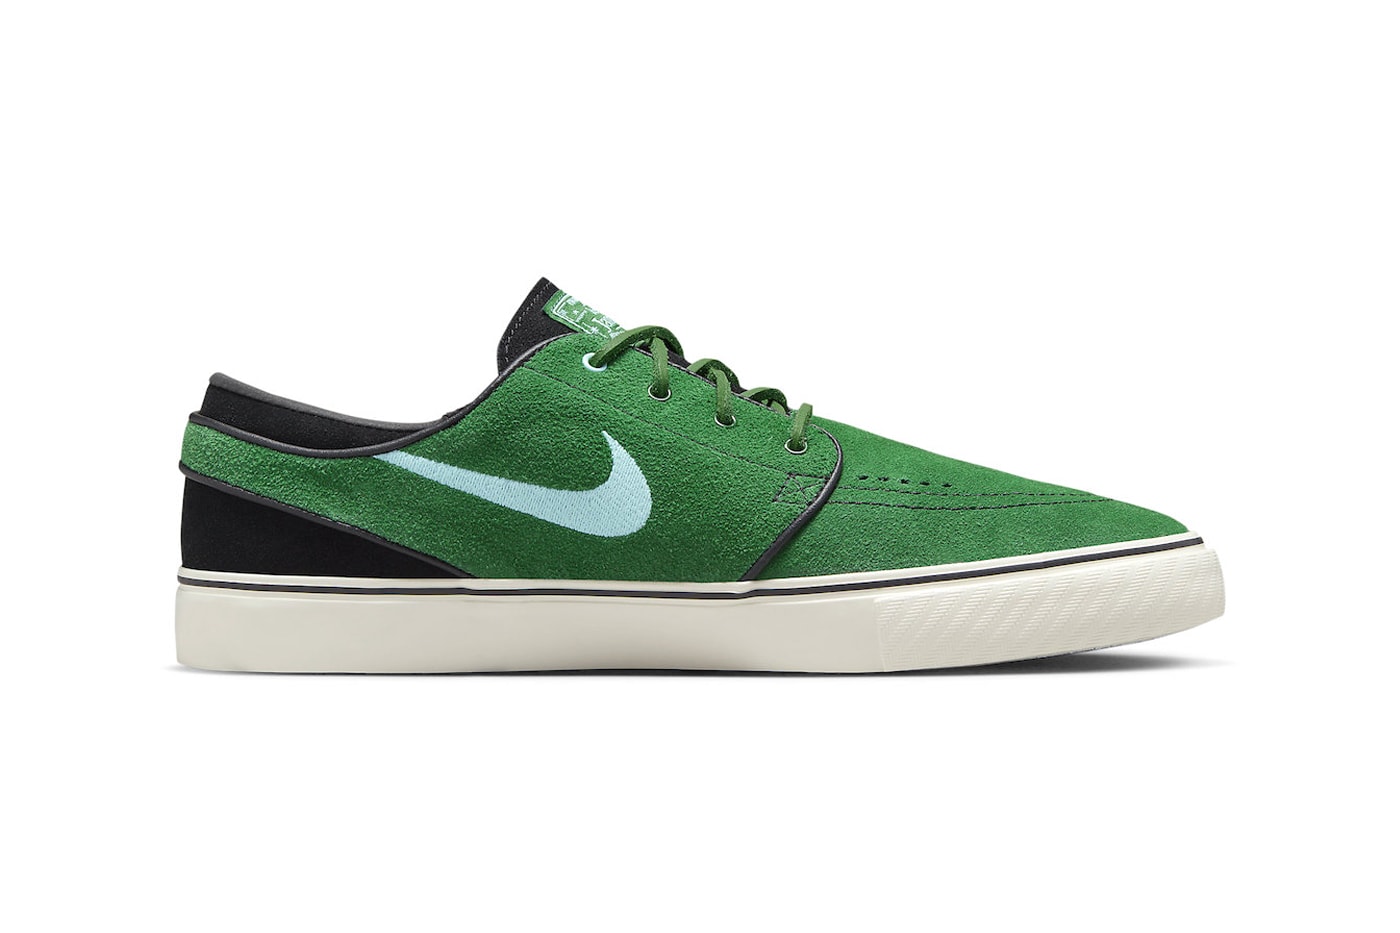 Nike SB Janoski OG+ Surfaces in "Going Green" DV5475-300 Gorge Green/Copa-Action Green-Bright Cactus-Enamel Green-Black skate shoes nike swosh low top